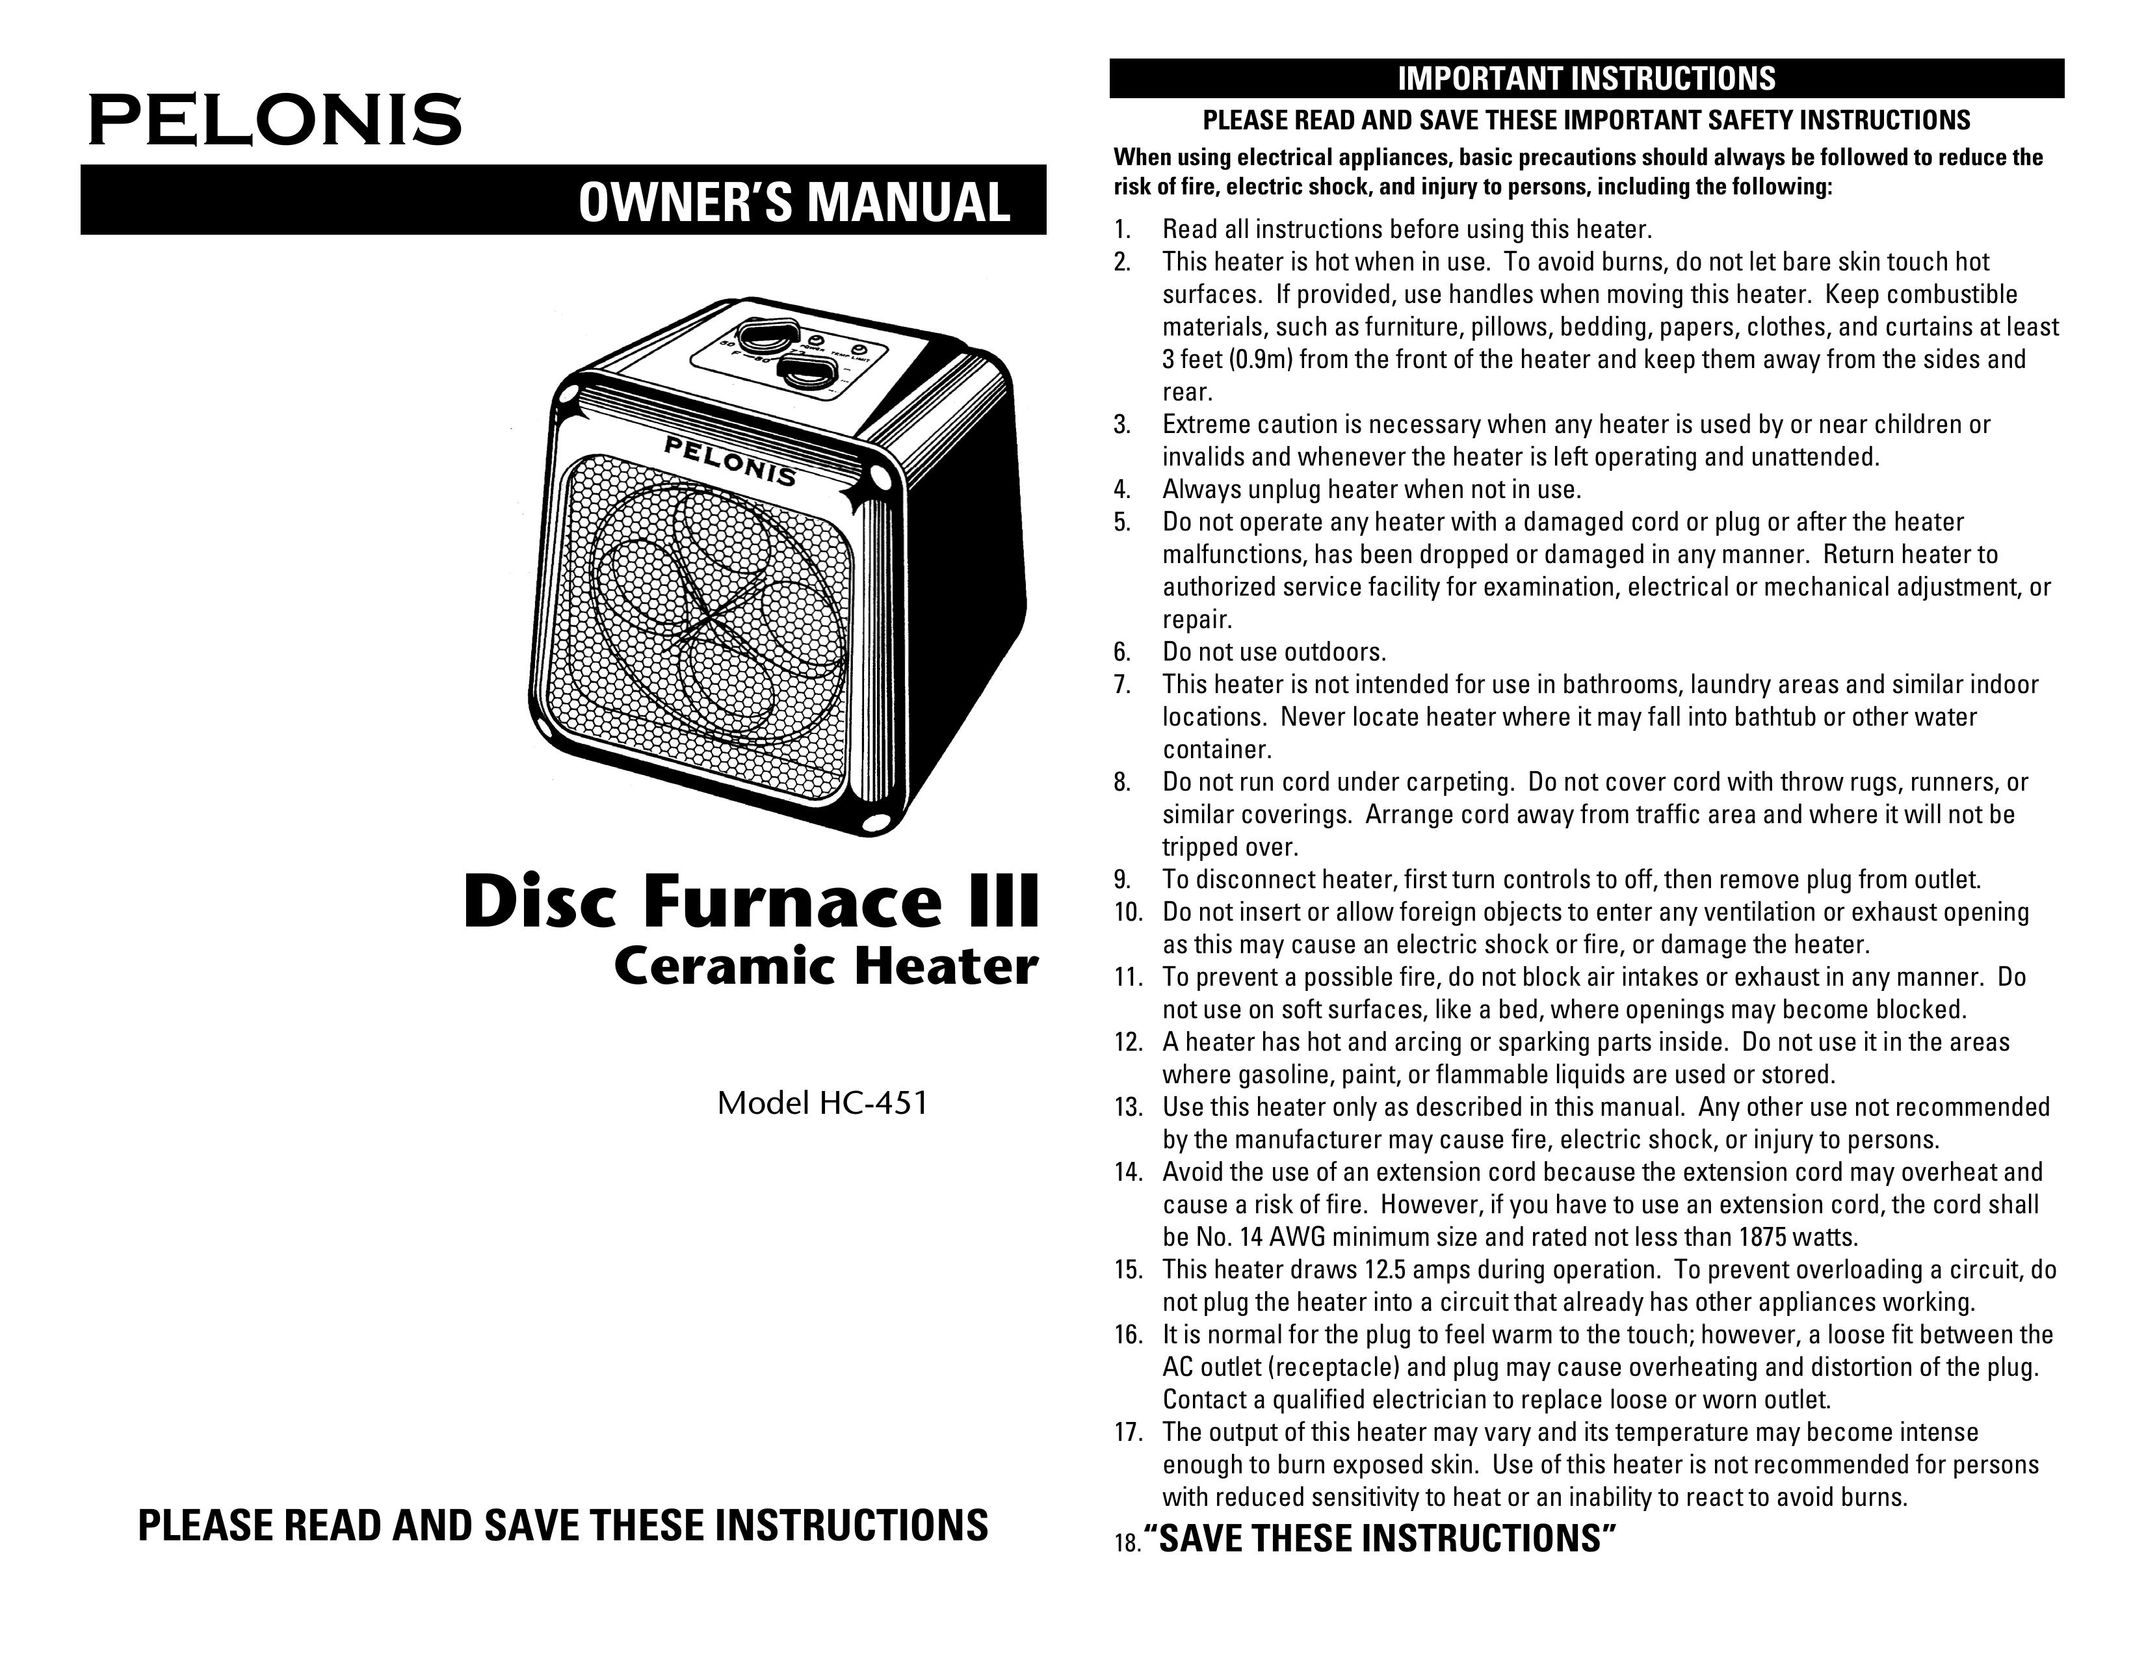 Pelonis HC-451 Electric Heater User Manual